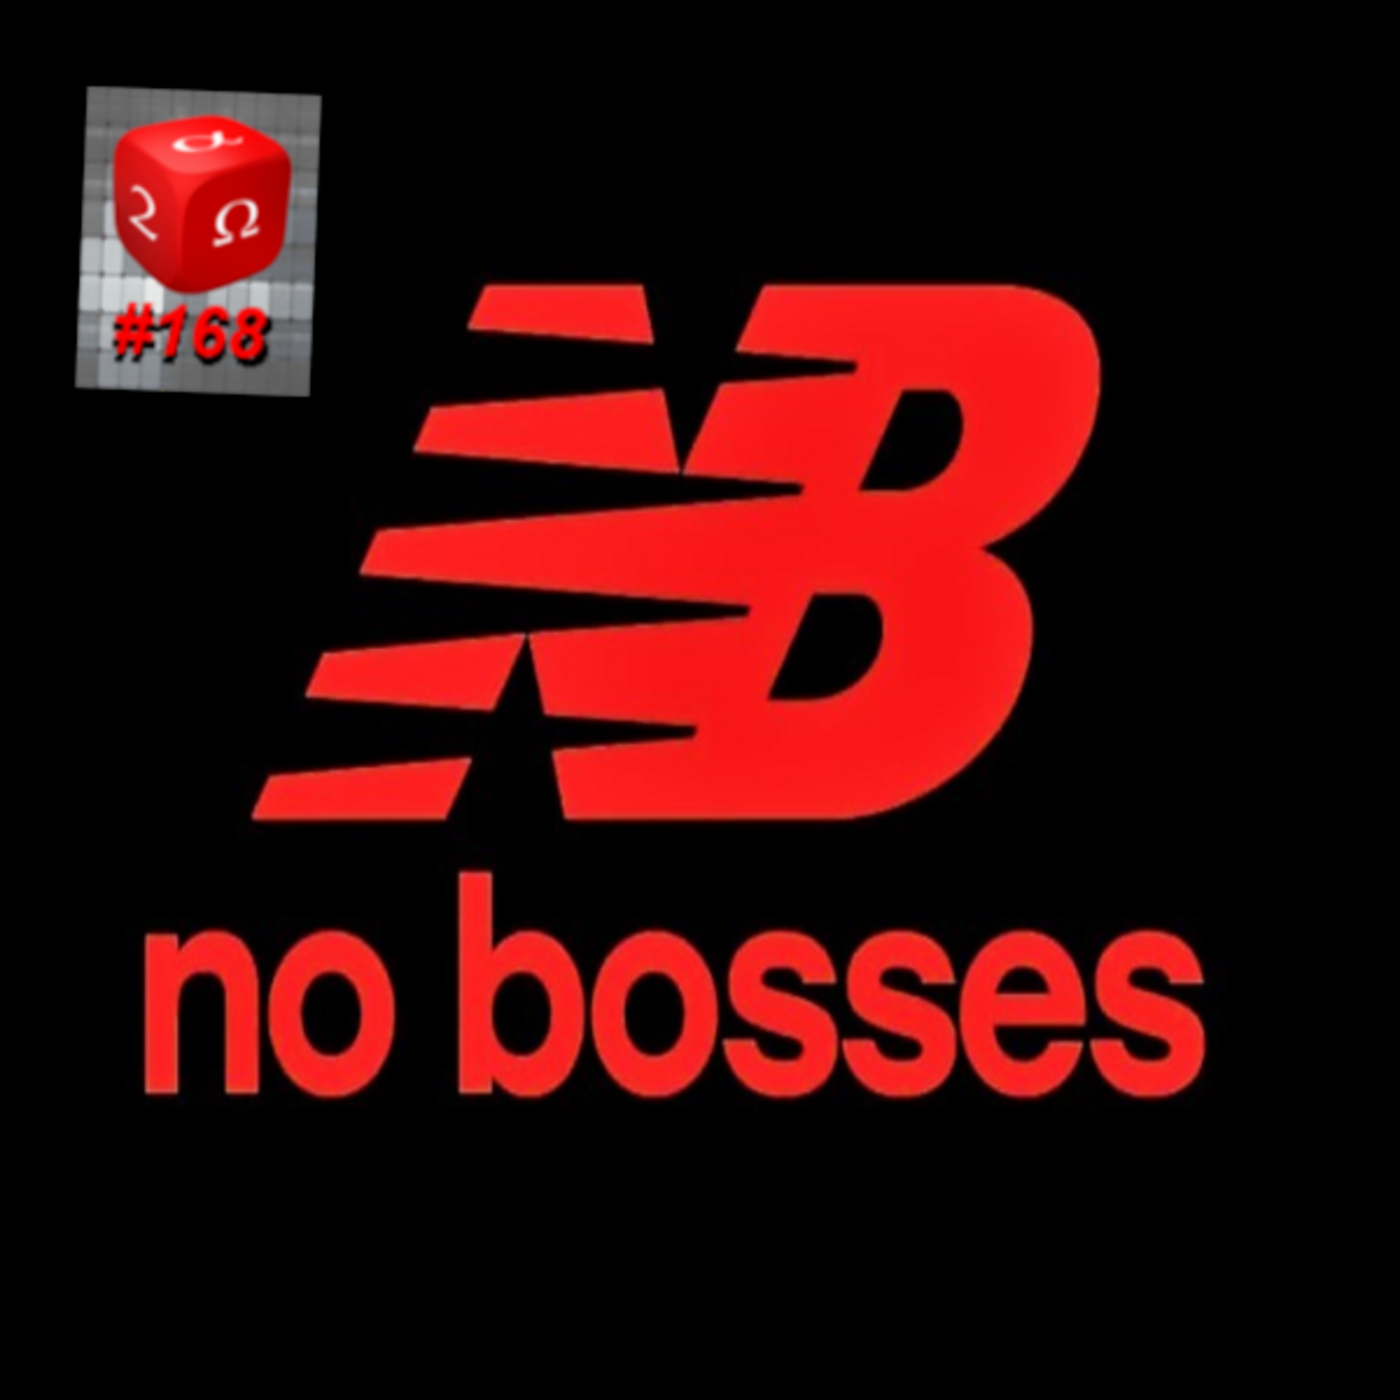 Episode 168: #168 No Bosses w/ Michael Albert - Pt 3 TEASER